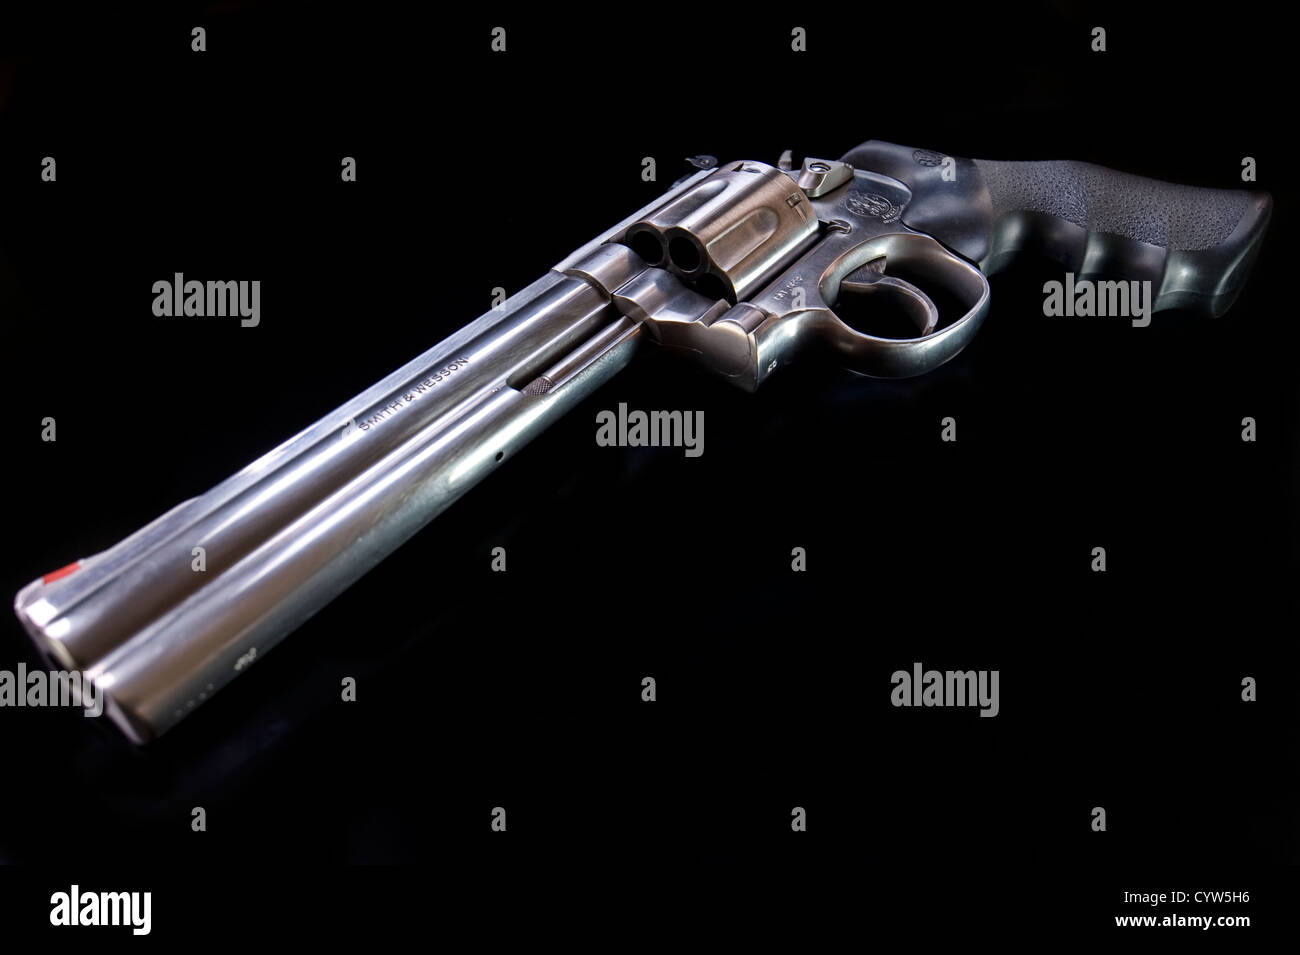 Revolver Smith & Wesson 686 plus Stock Photo